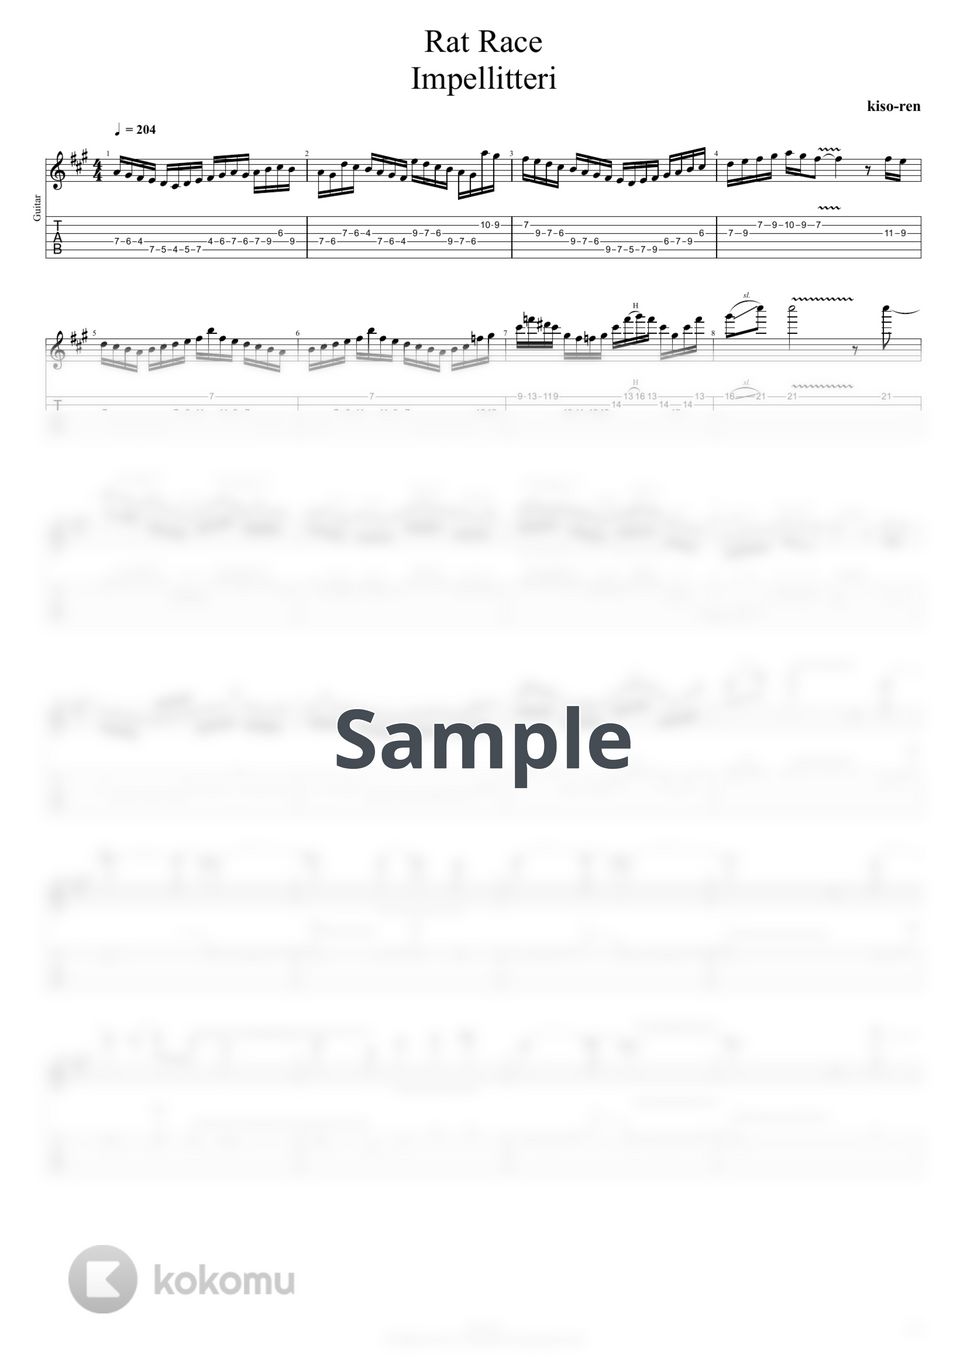 IMPELLITTERI - Rat Race - IMPELLITTERI Guitar Solo (TAB PDF & Guitar Pro files.（gp5）) by Technical Guitar